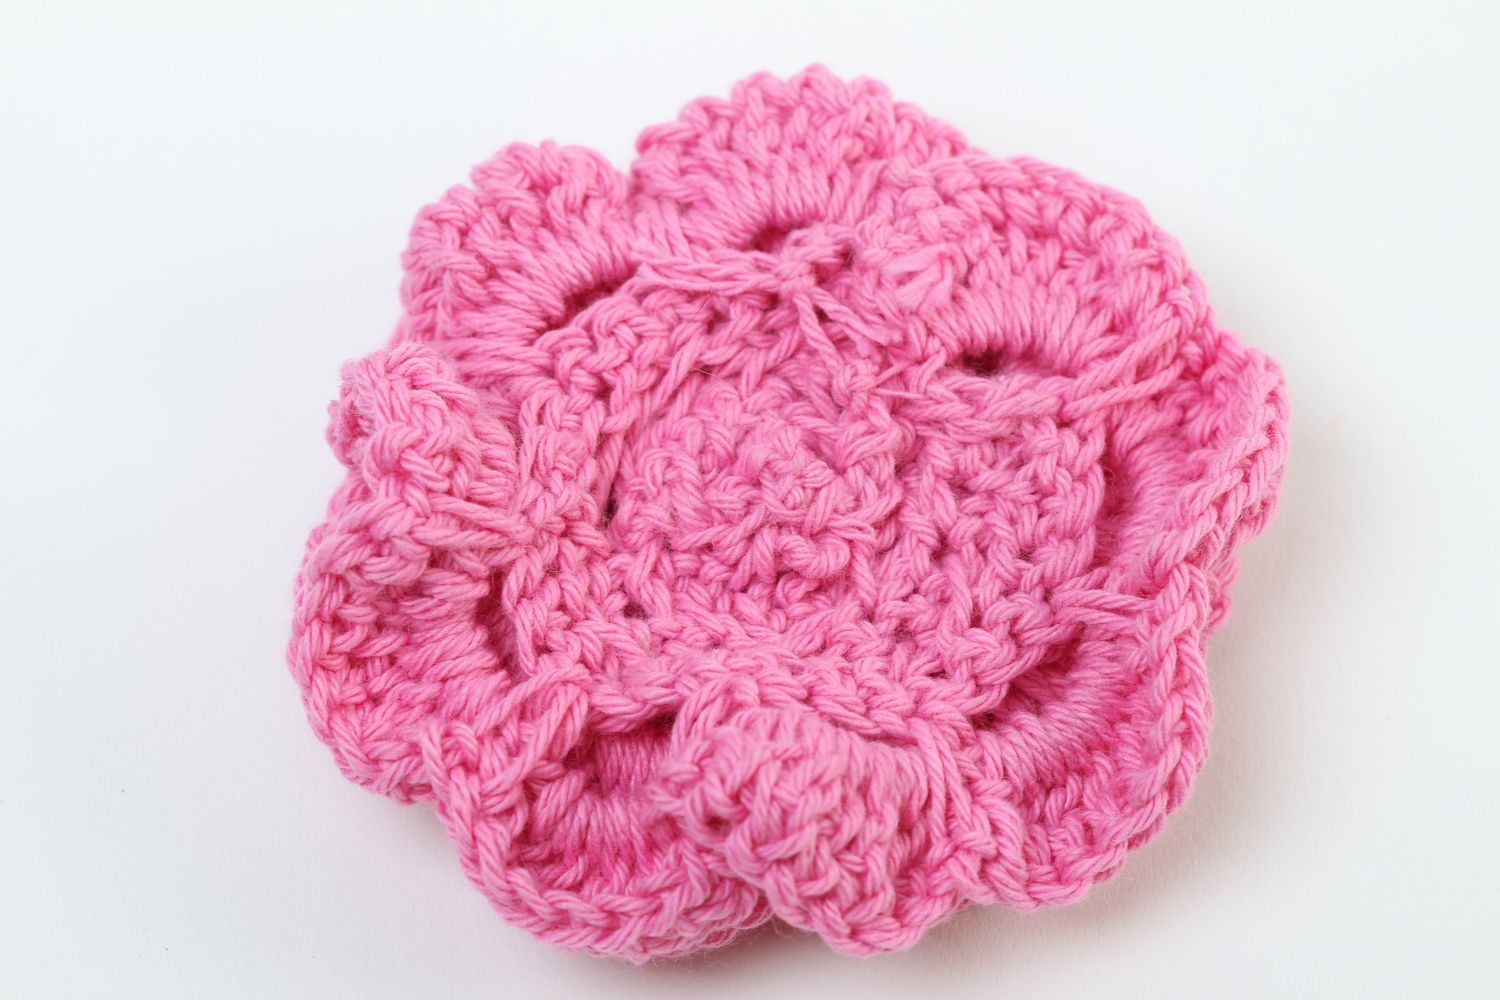 Handmade crocheted flower hair accessories craft supplies jewelry supplies
 photo 4